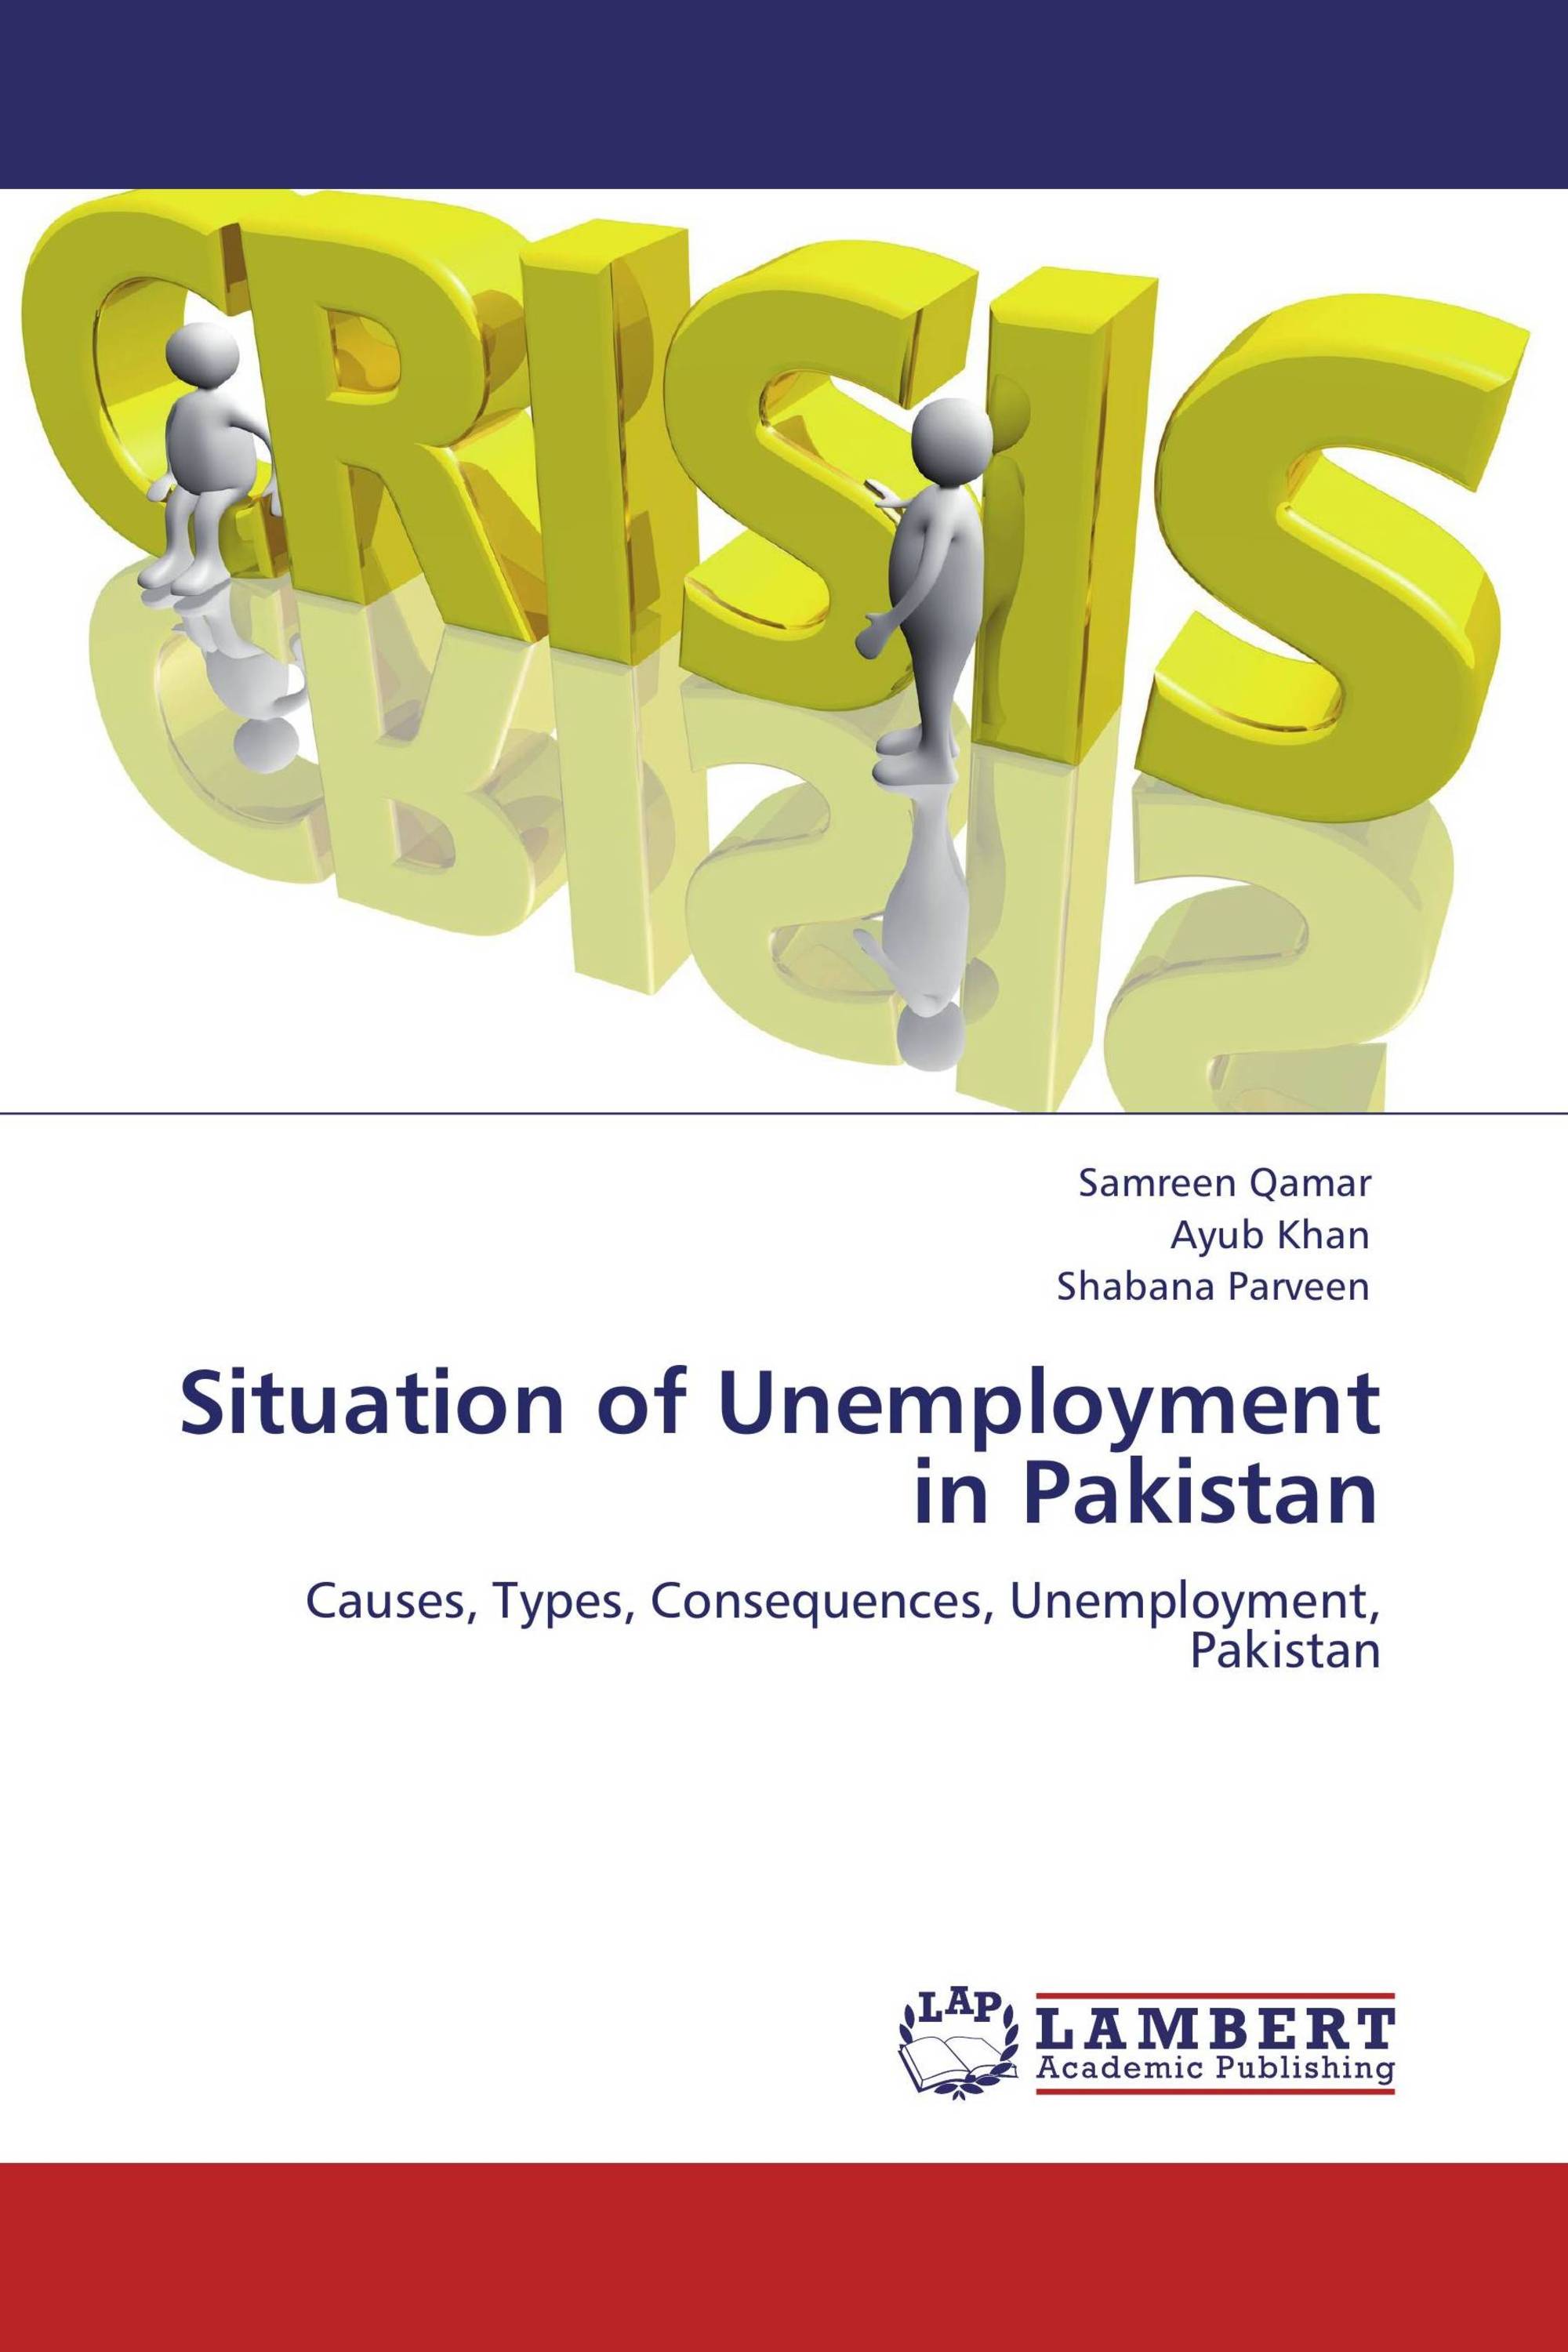 hypothesis of unemployment in pakistan